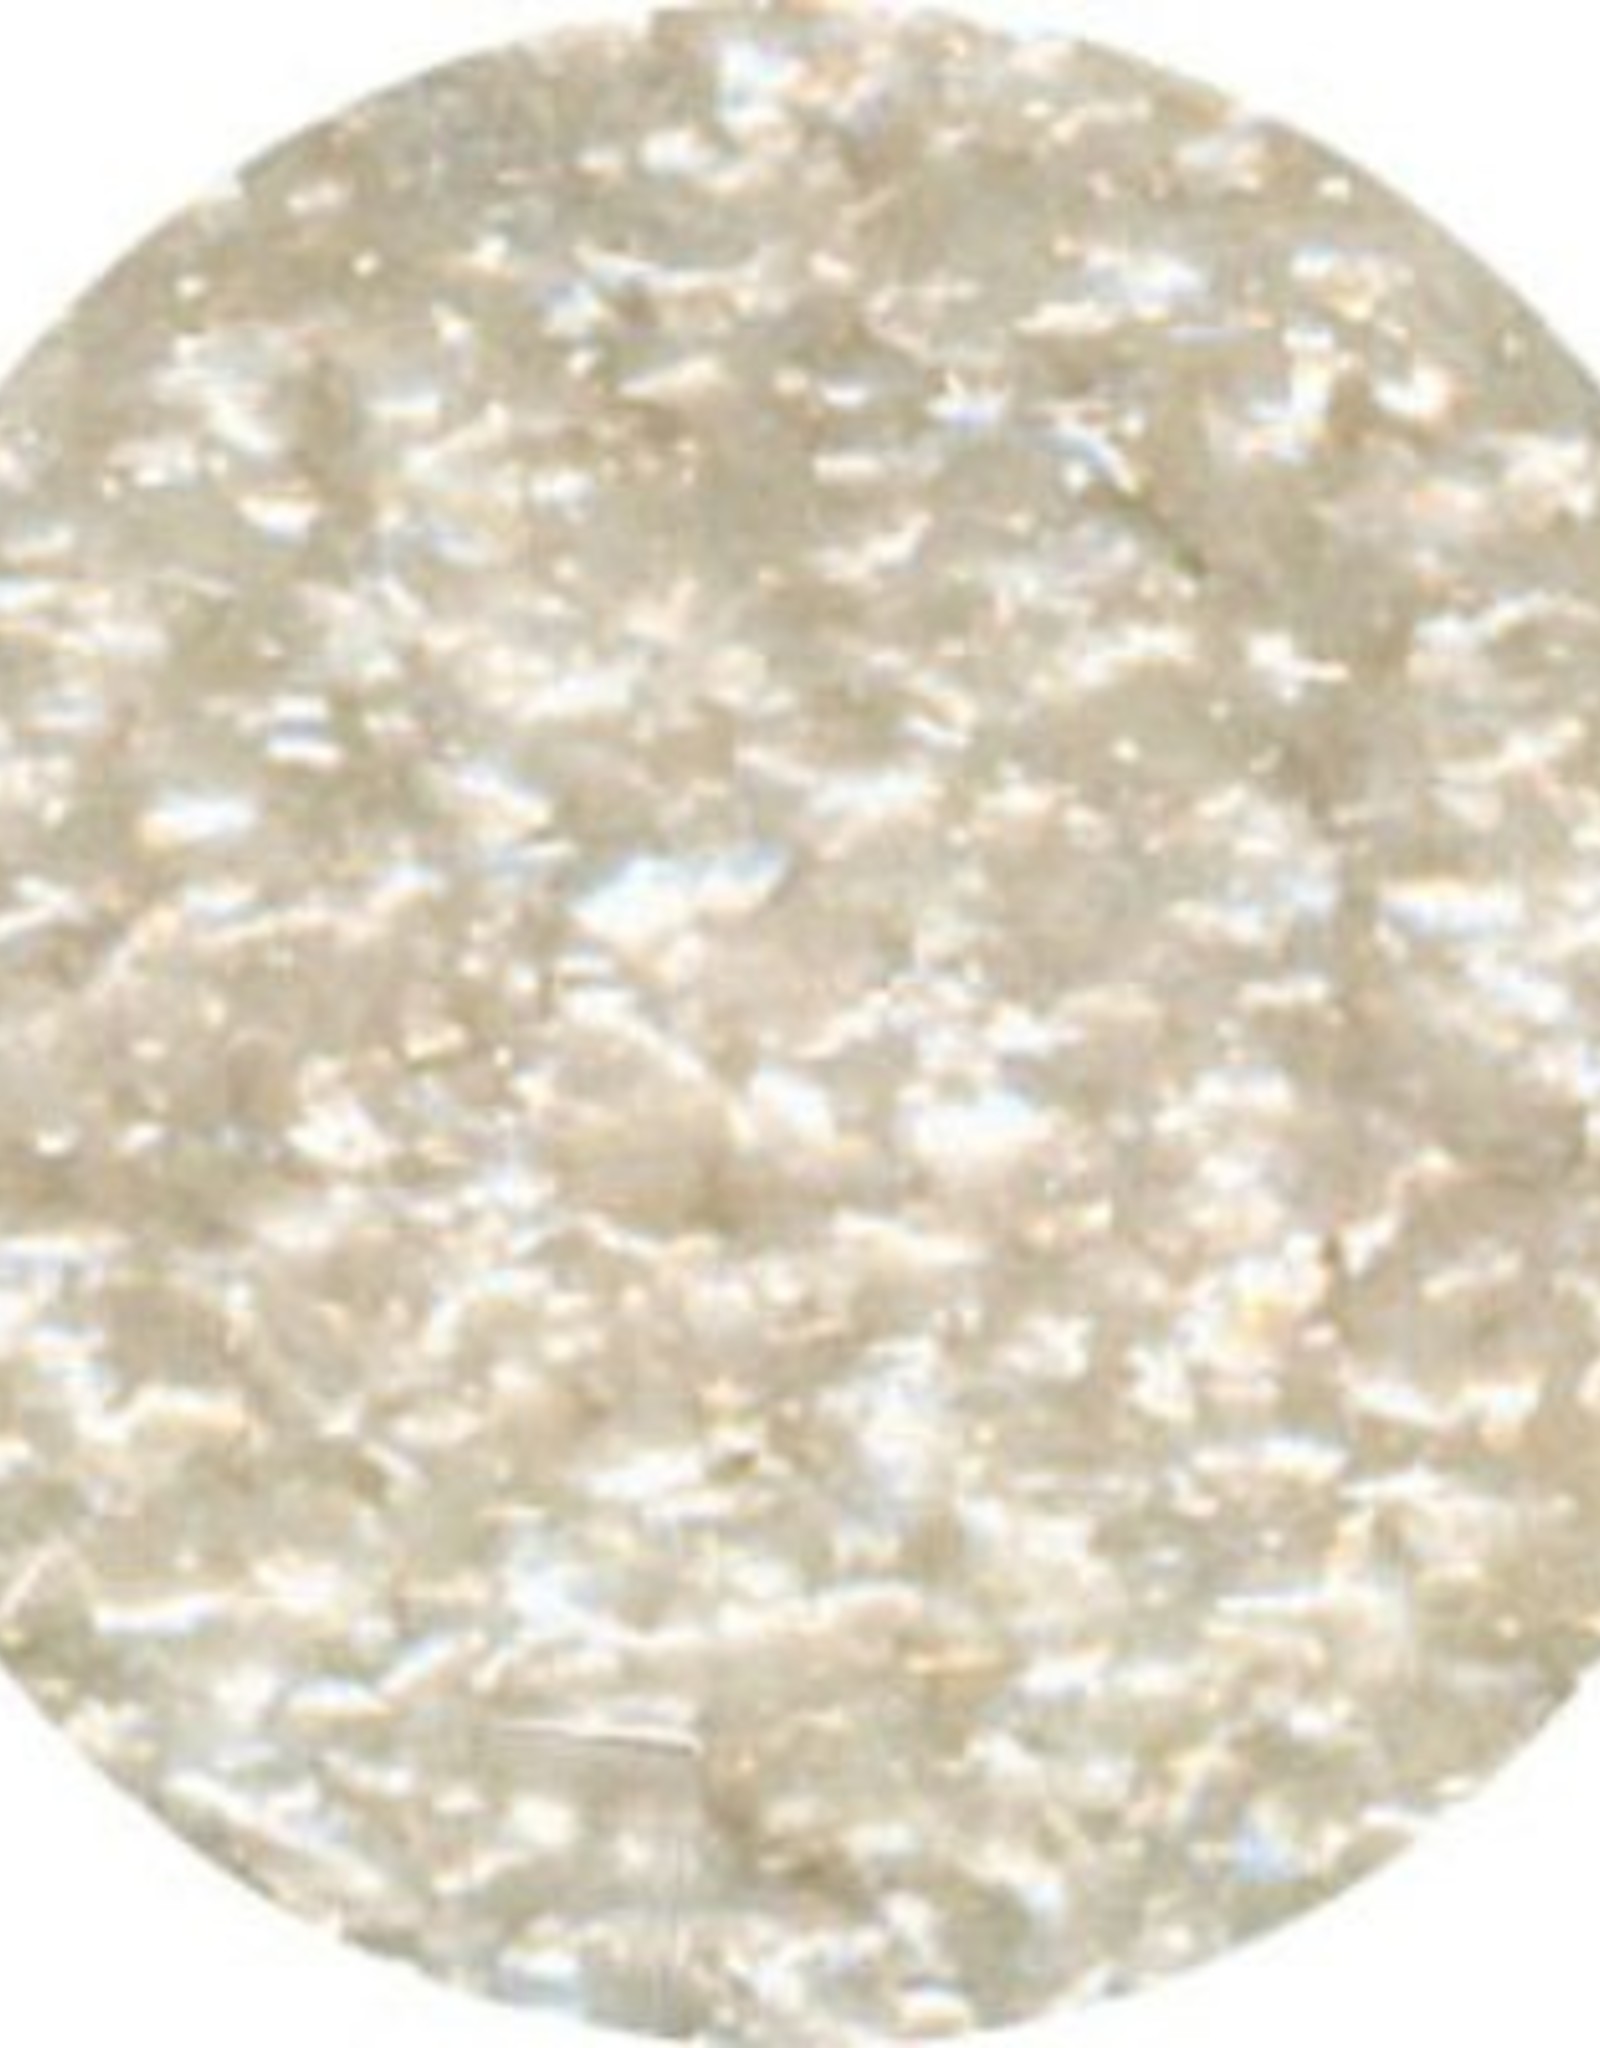 Edible Glitter (White 1 oz)